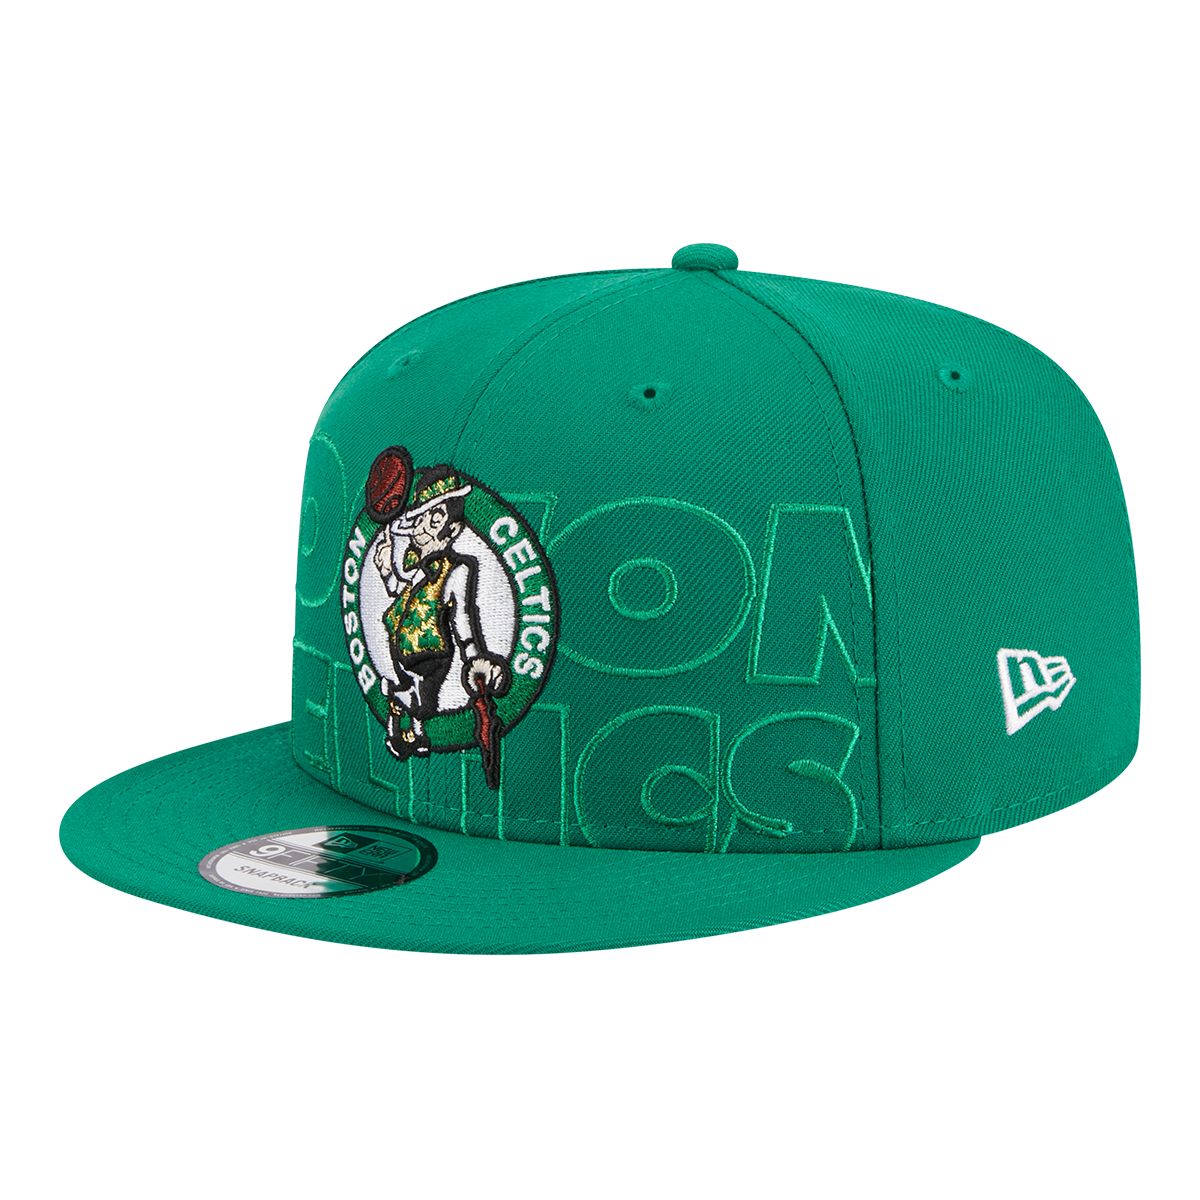 Boston Celtics New Era 9FIFTY Draft Cap